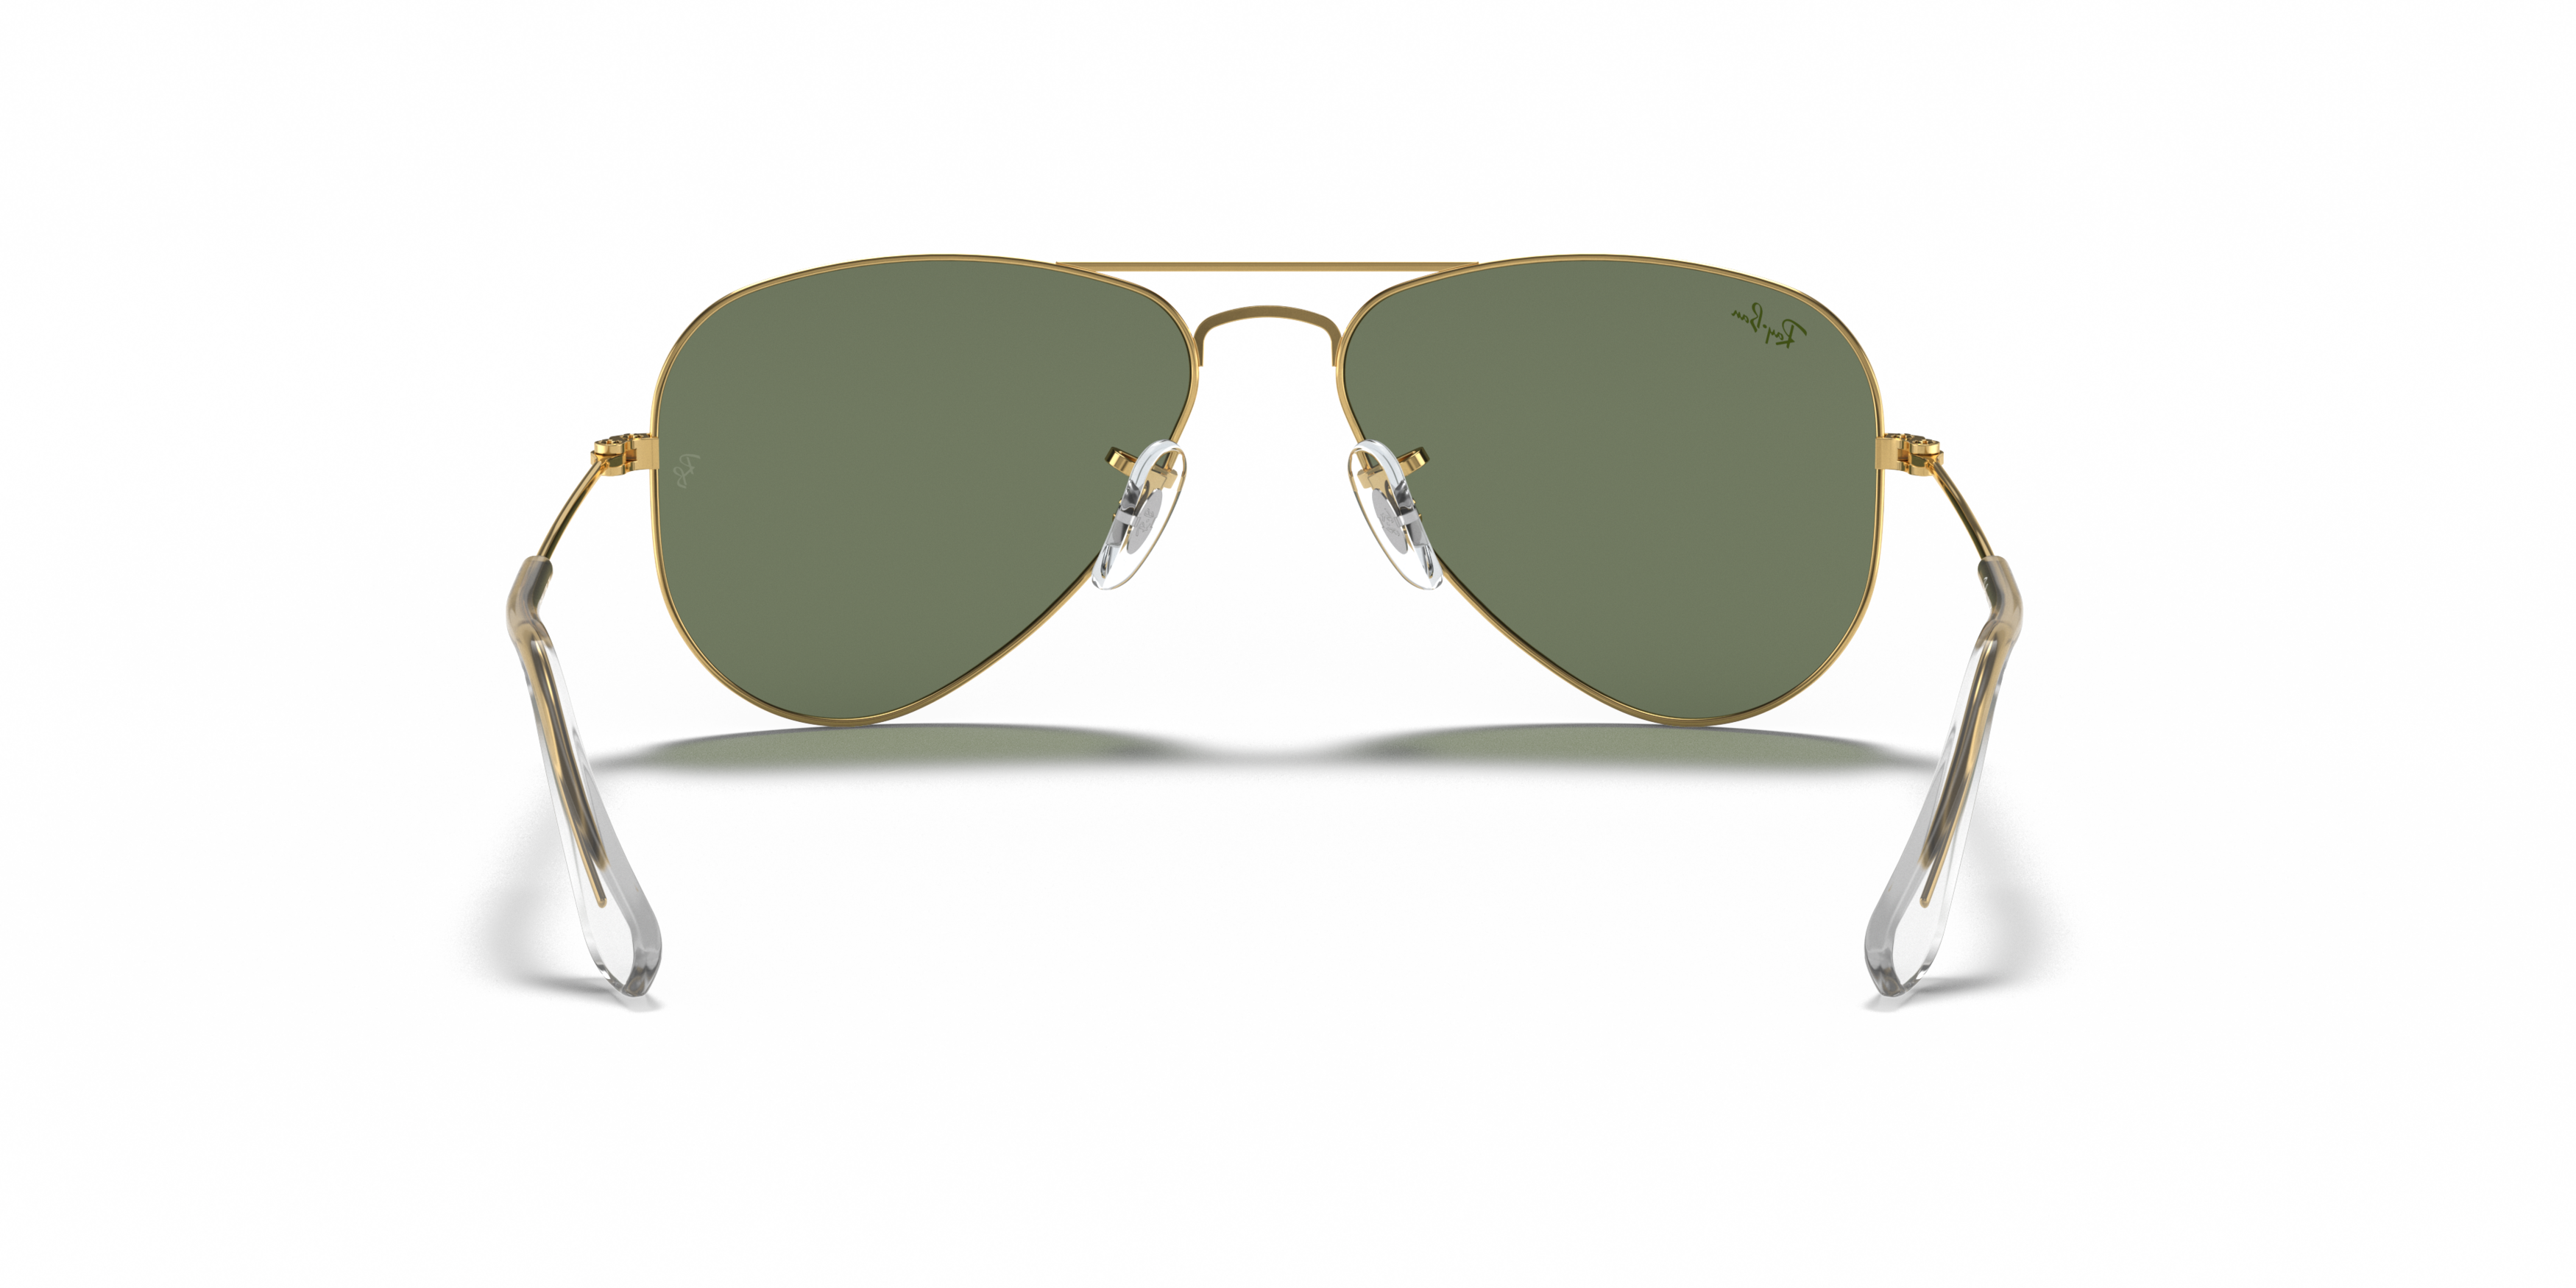 Detail02 Ray-Ban RJ9506S Children's Sunglasses Green / Gold